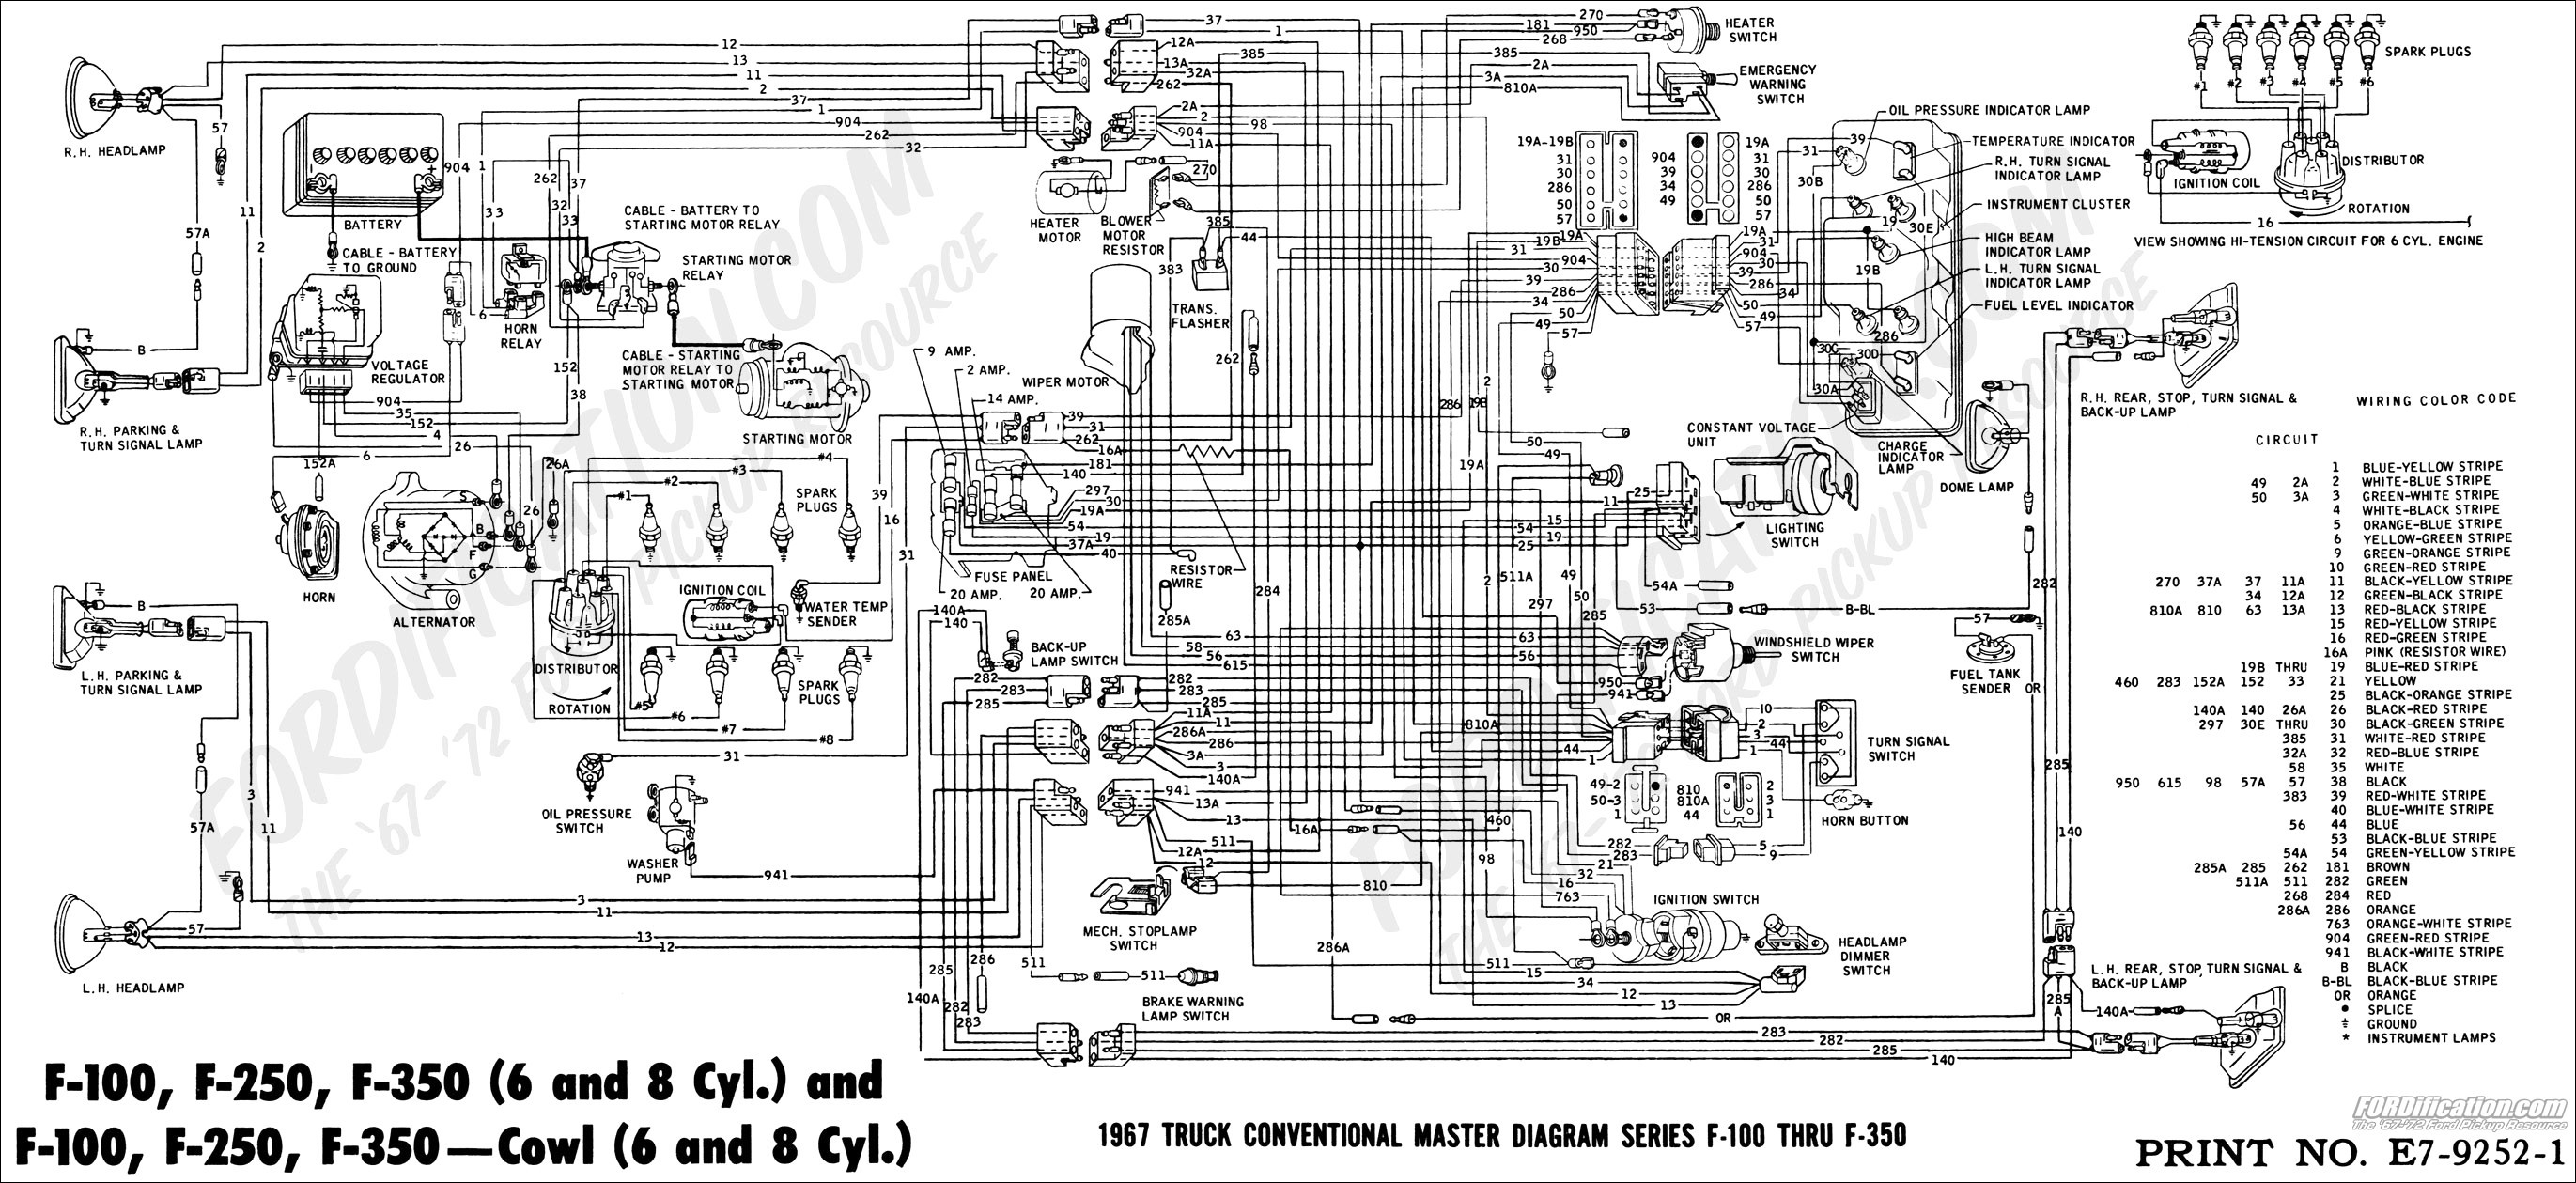 1992 Ford F150 Fuel Pump Wiring Diagram from detoxicrecenze.com